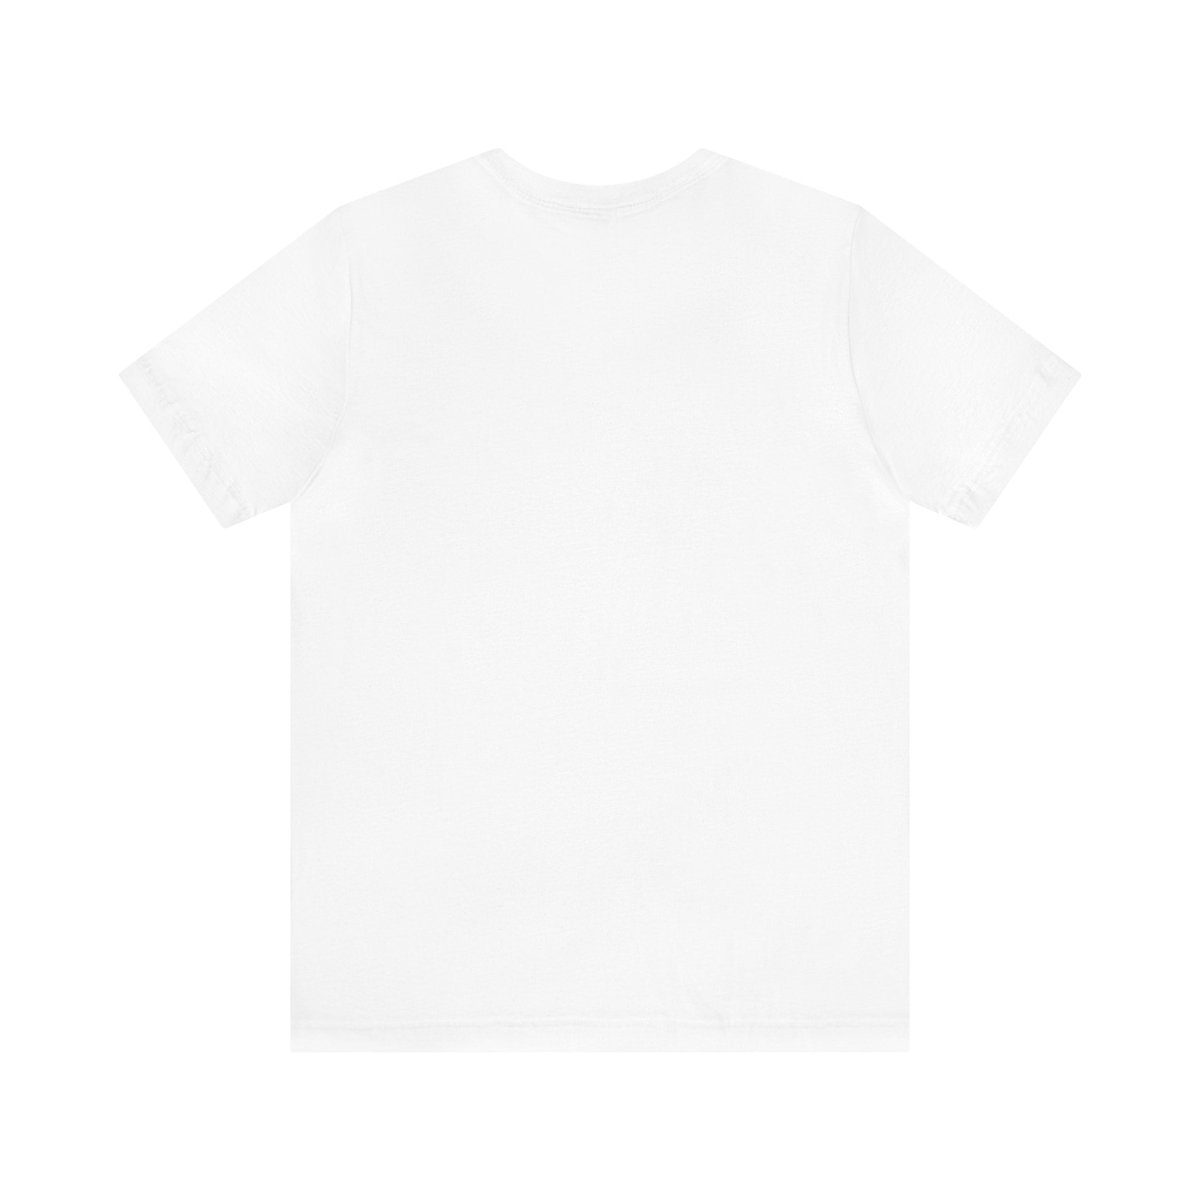 ARM Map Unisex T-Shirt - Cultics